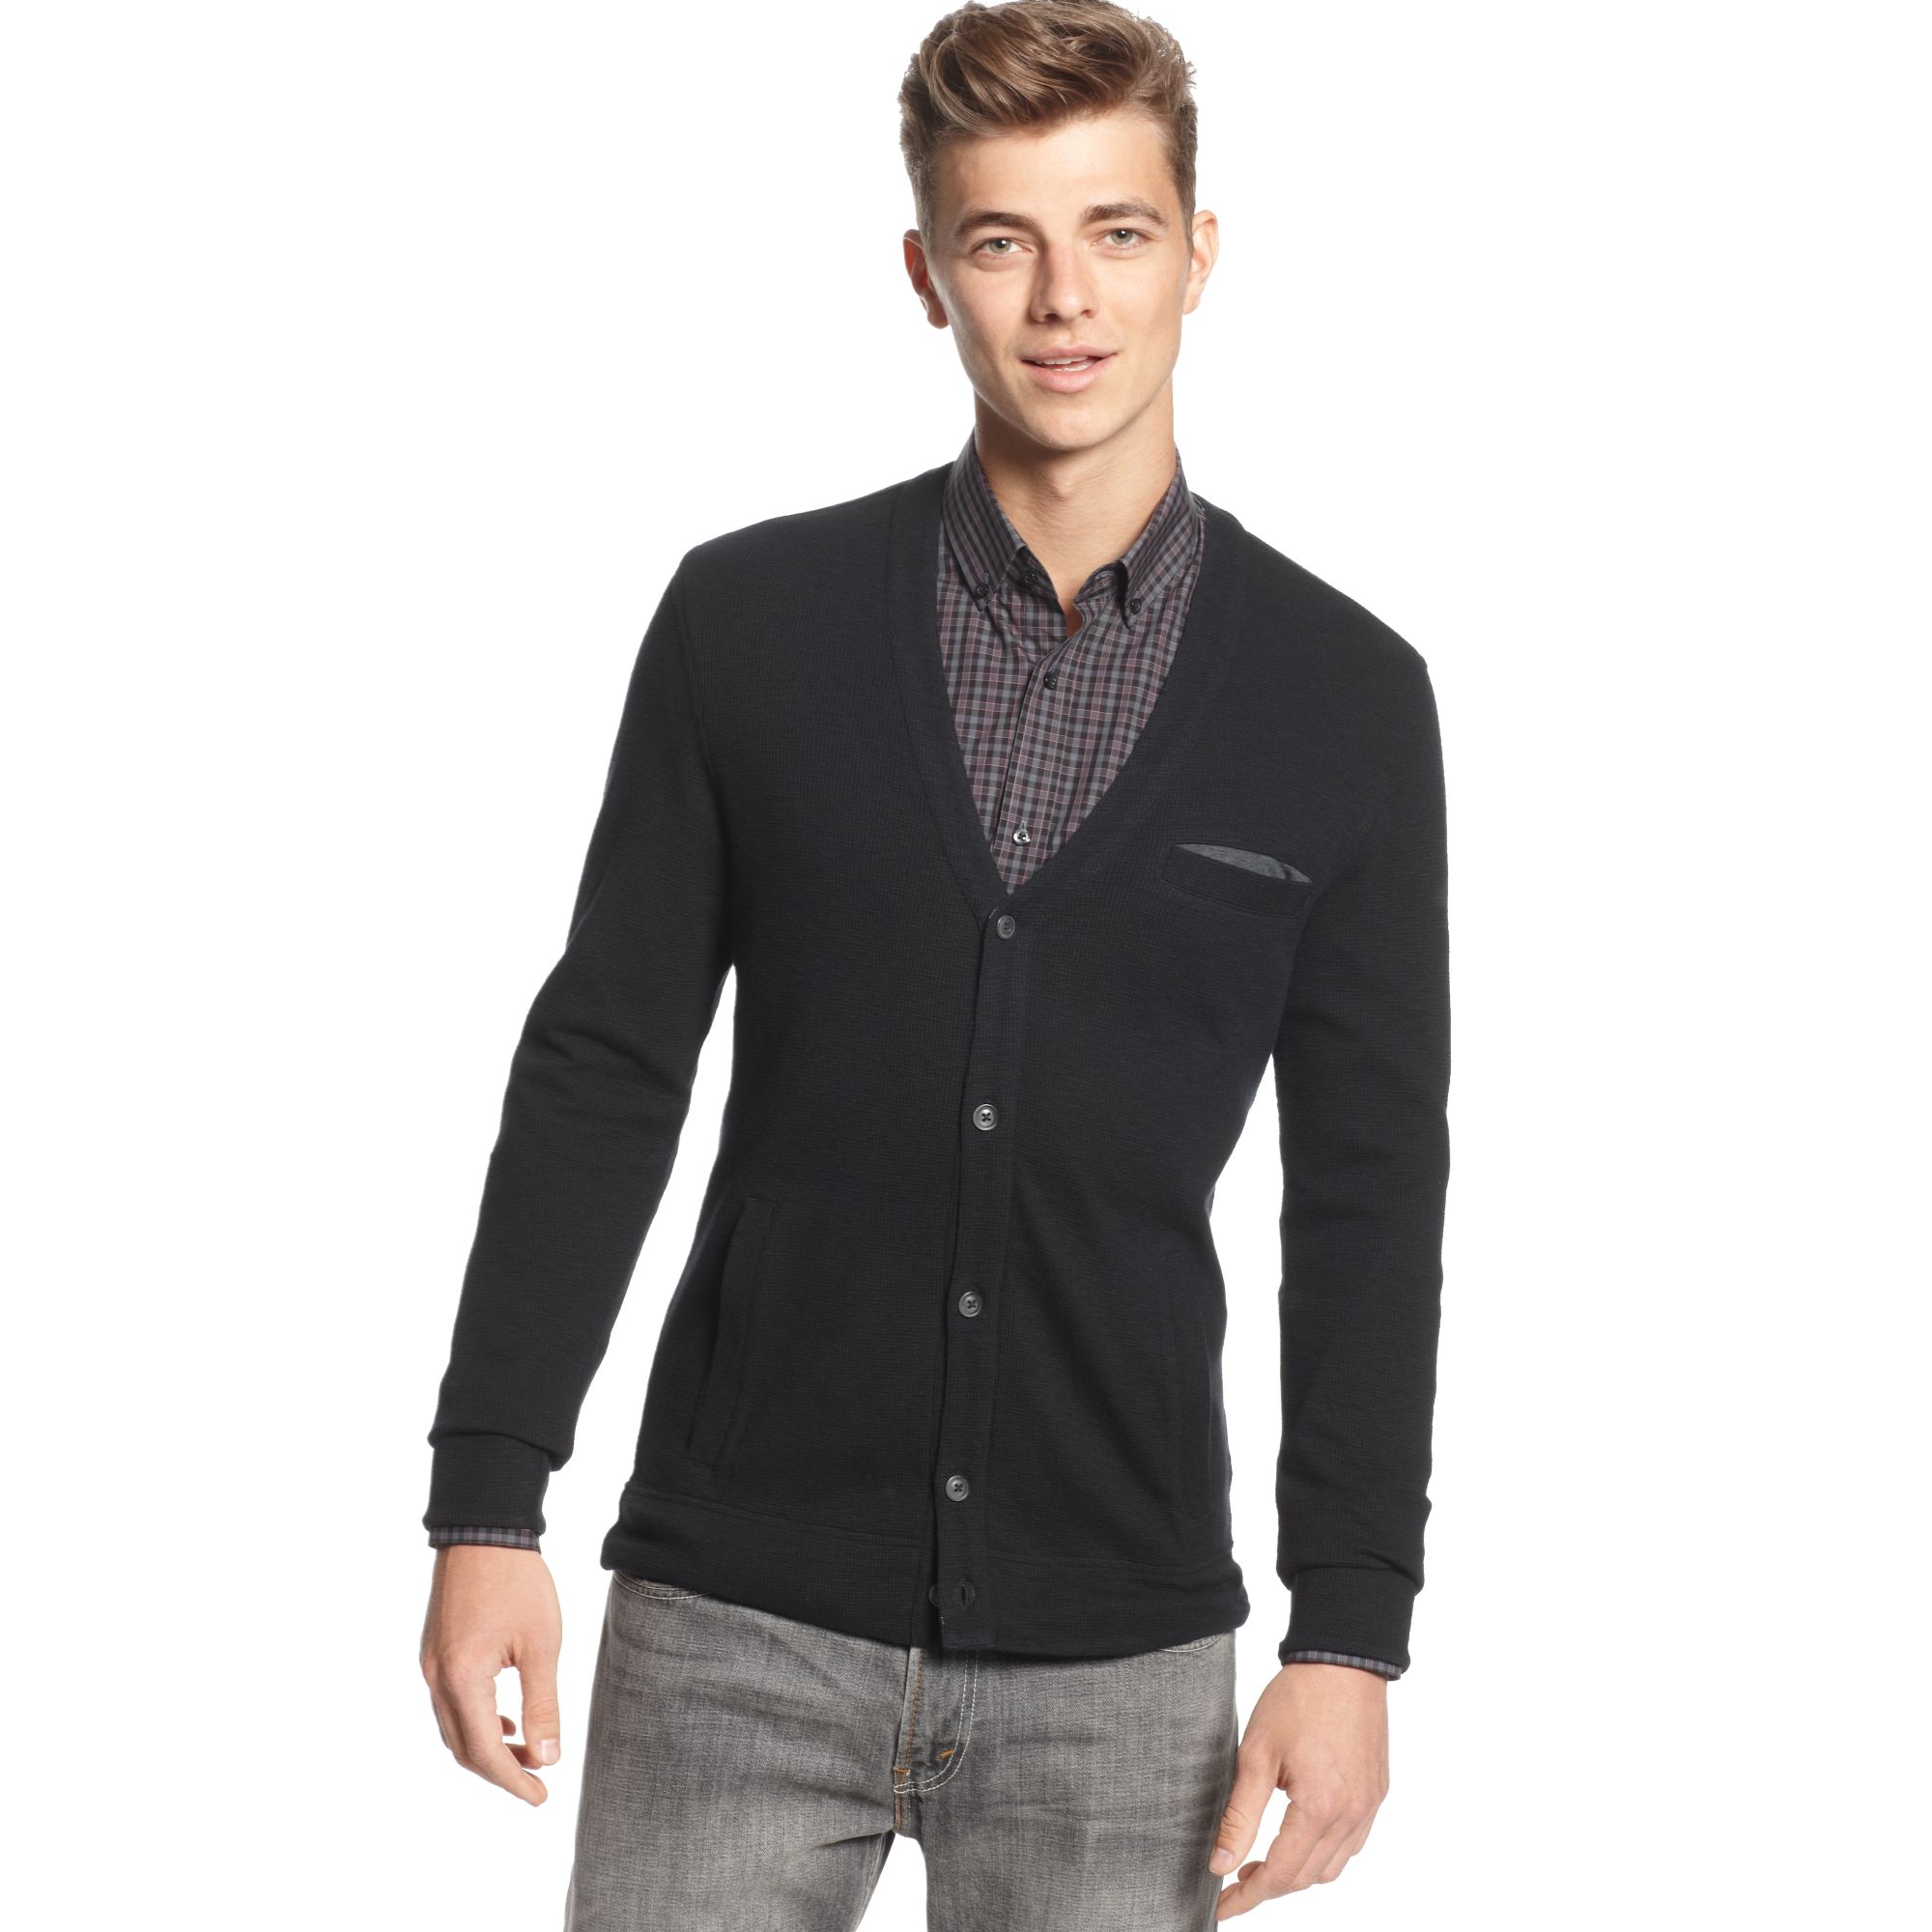 Lyst - Inc International Concepts Long Sleeve Cardigan Shirt in Black ...